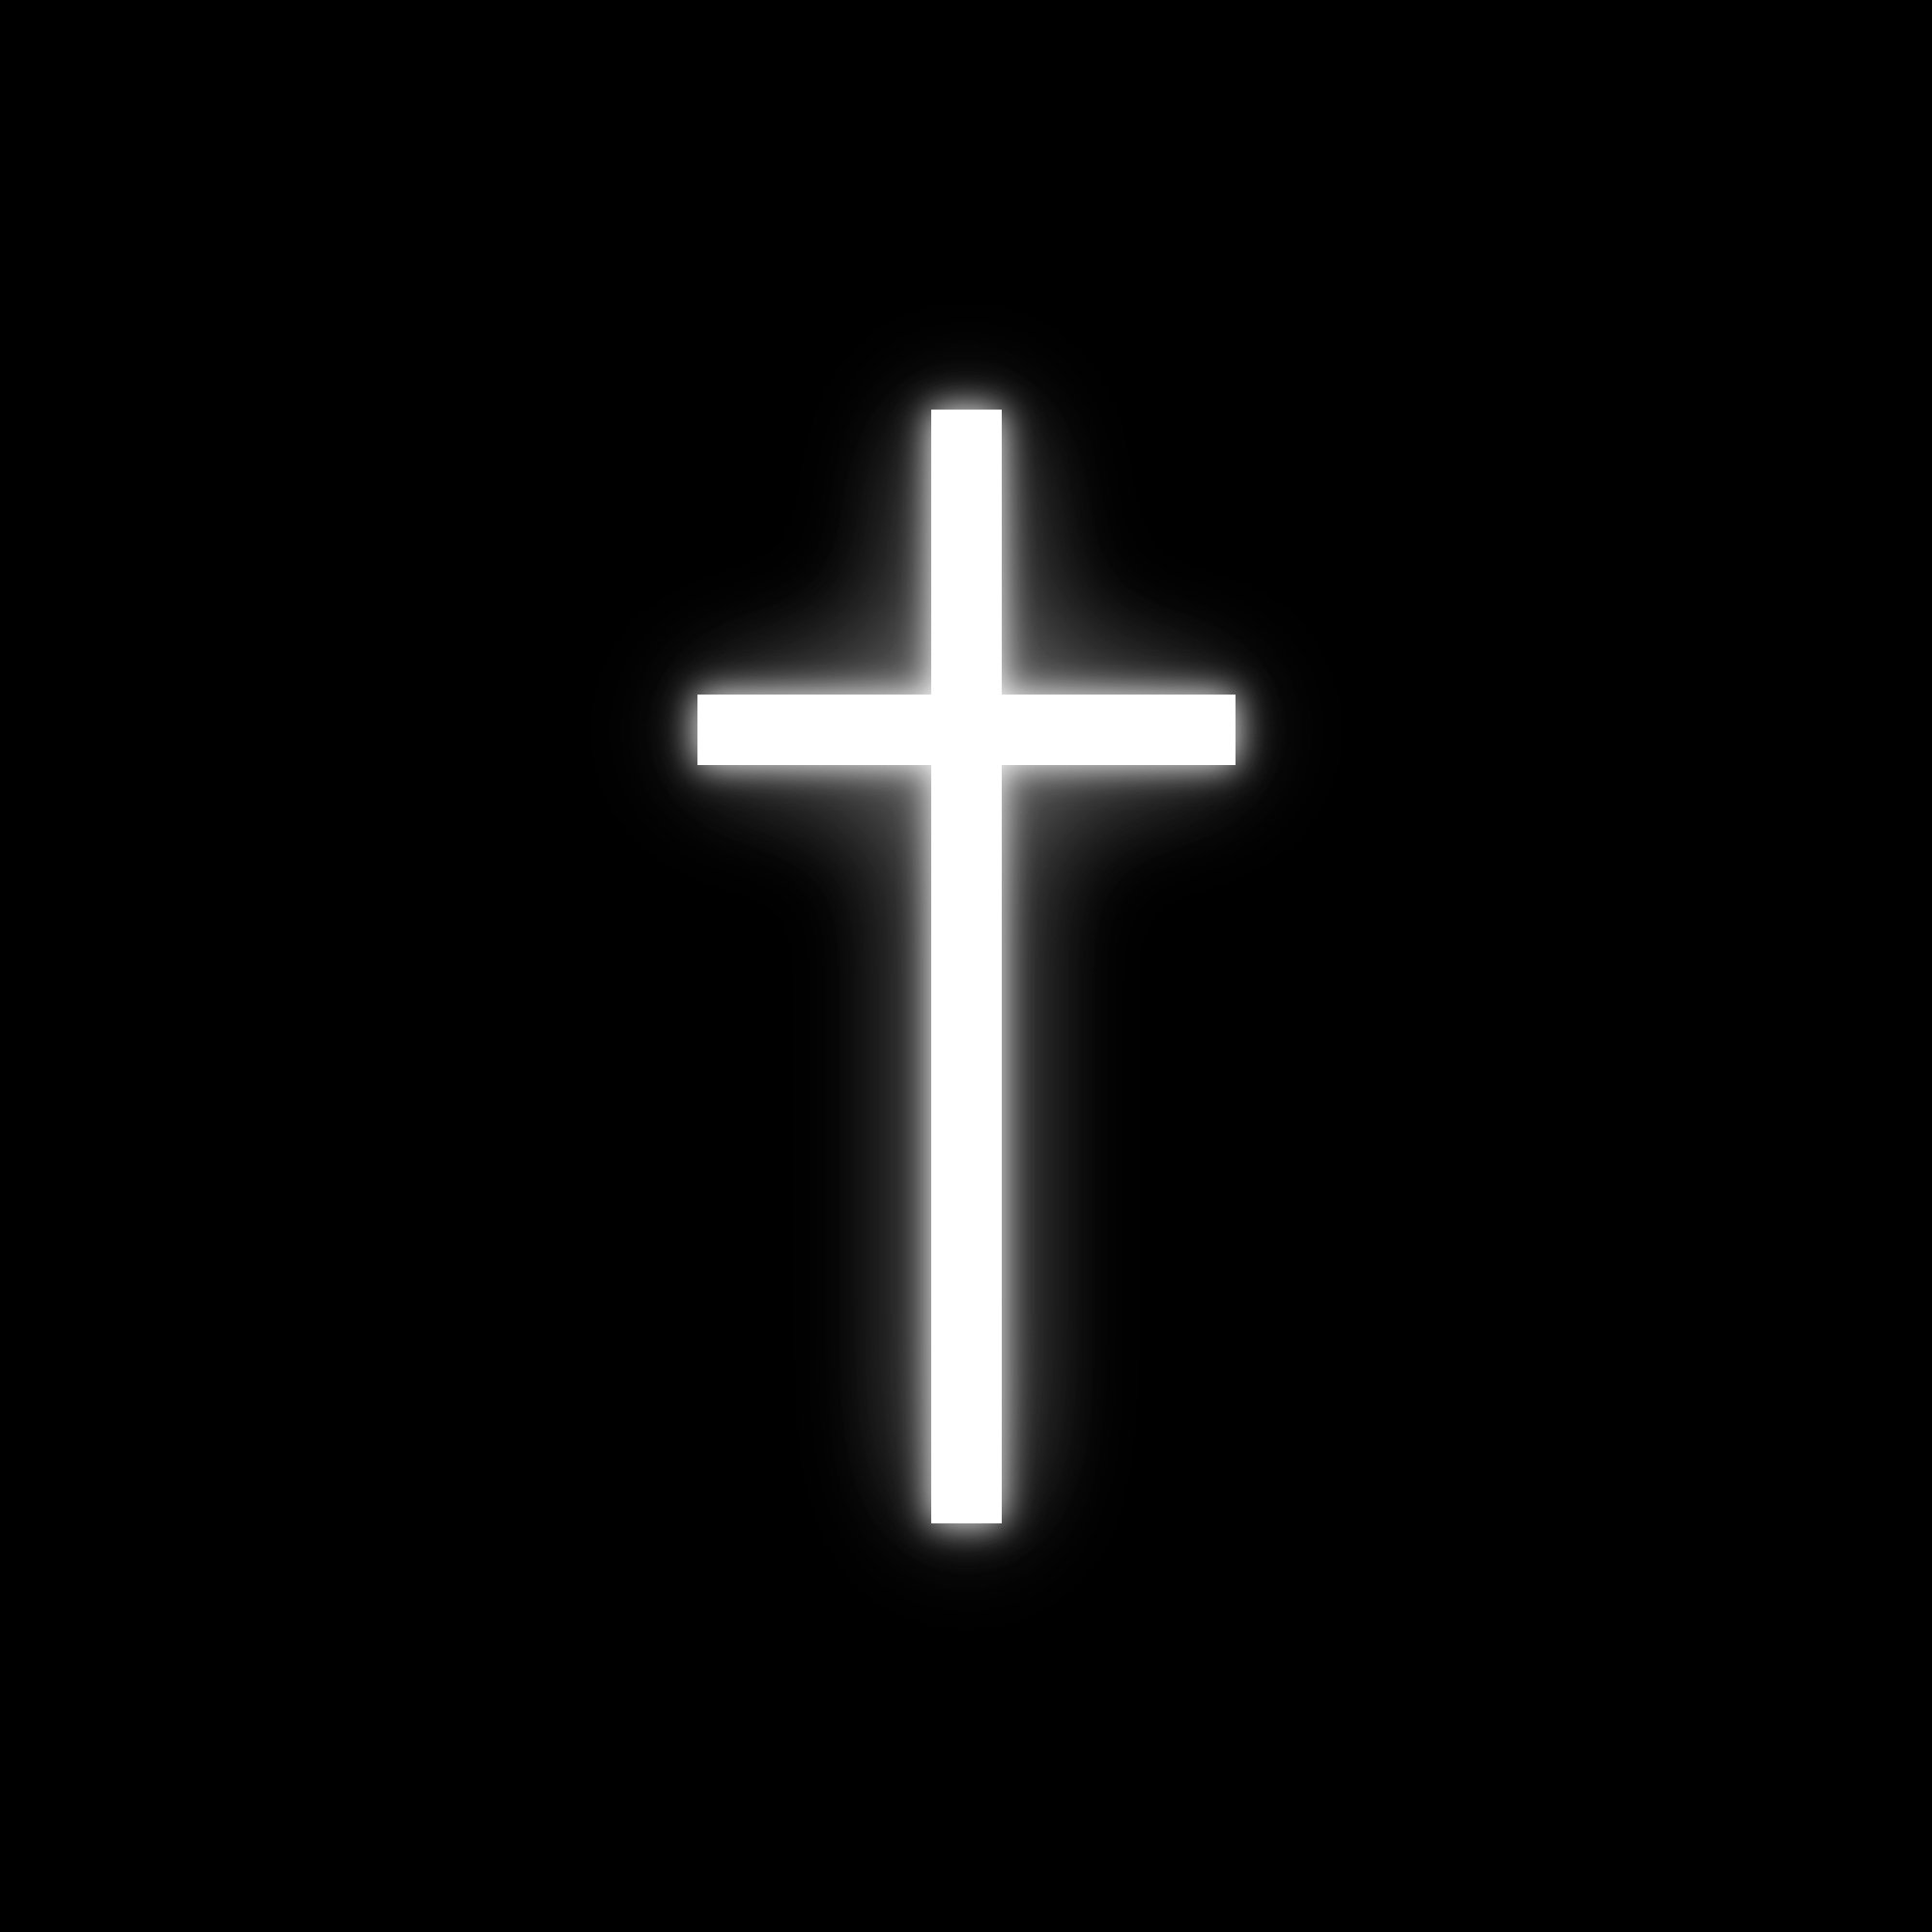 Шаман исповедь mp3. Крест на черном фоне. Крест на темном фоне. Крест во тьме. Христианский крест на черном фоне.